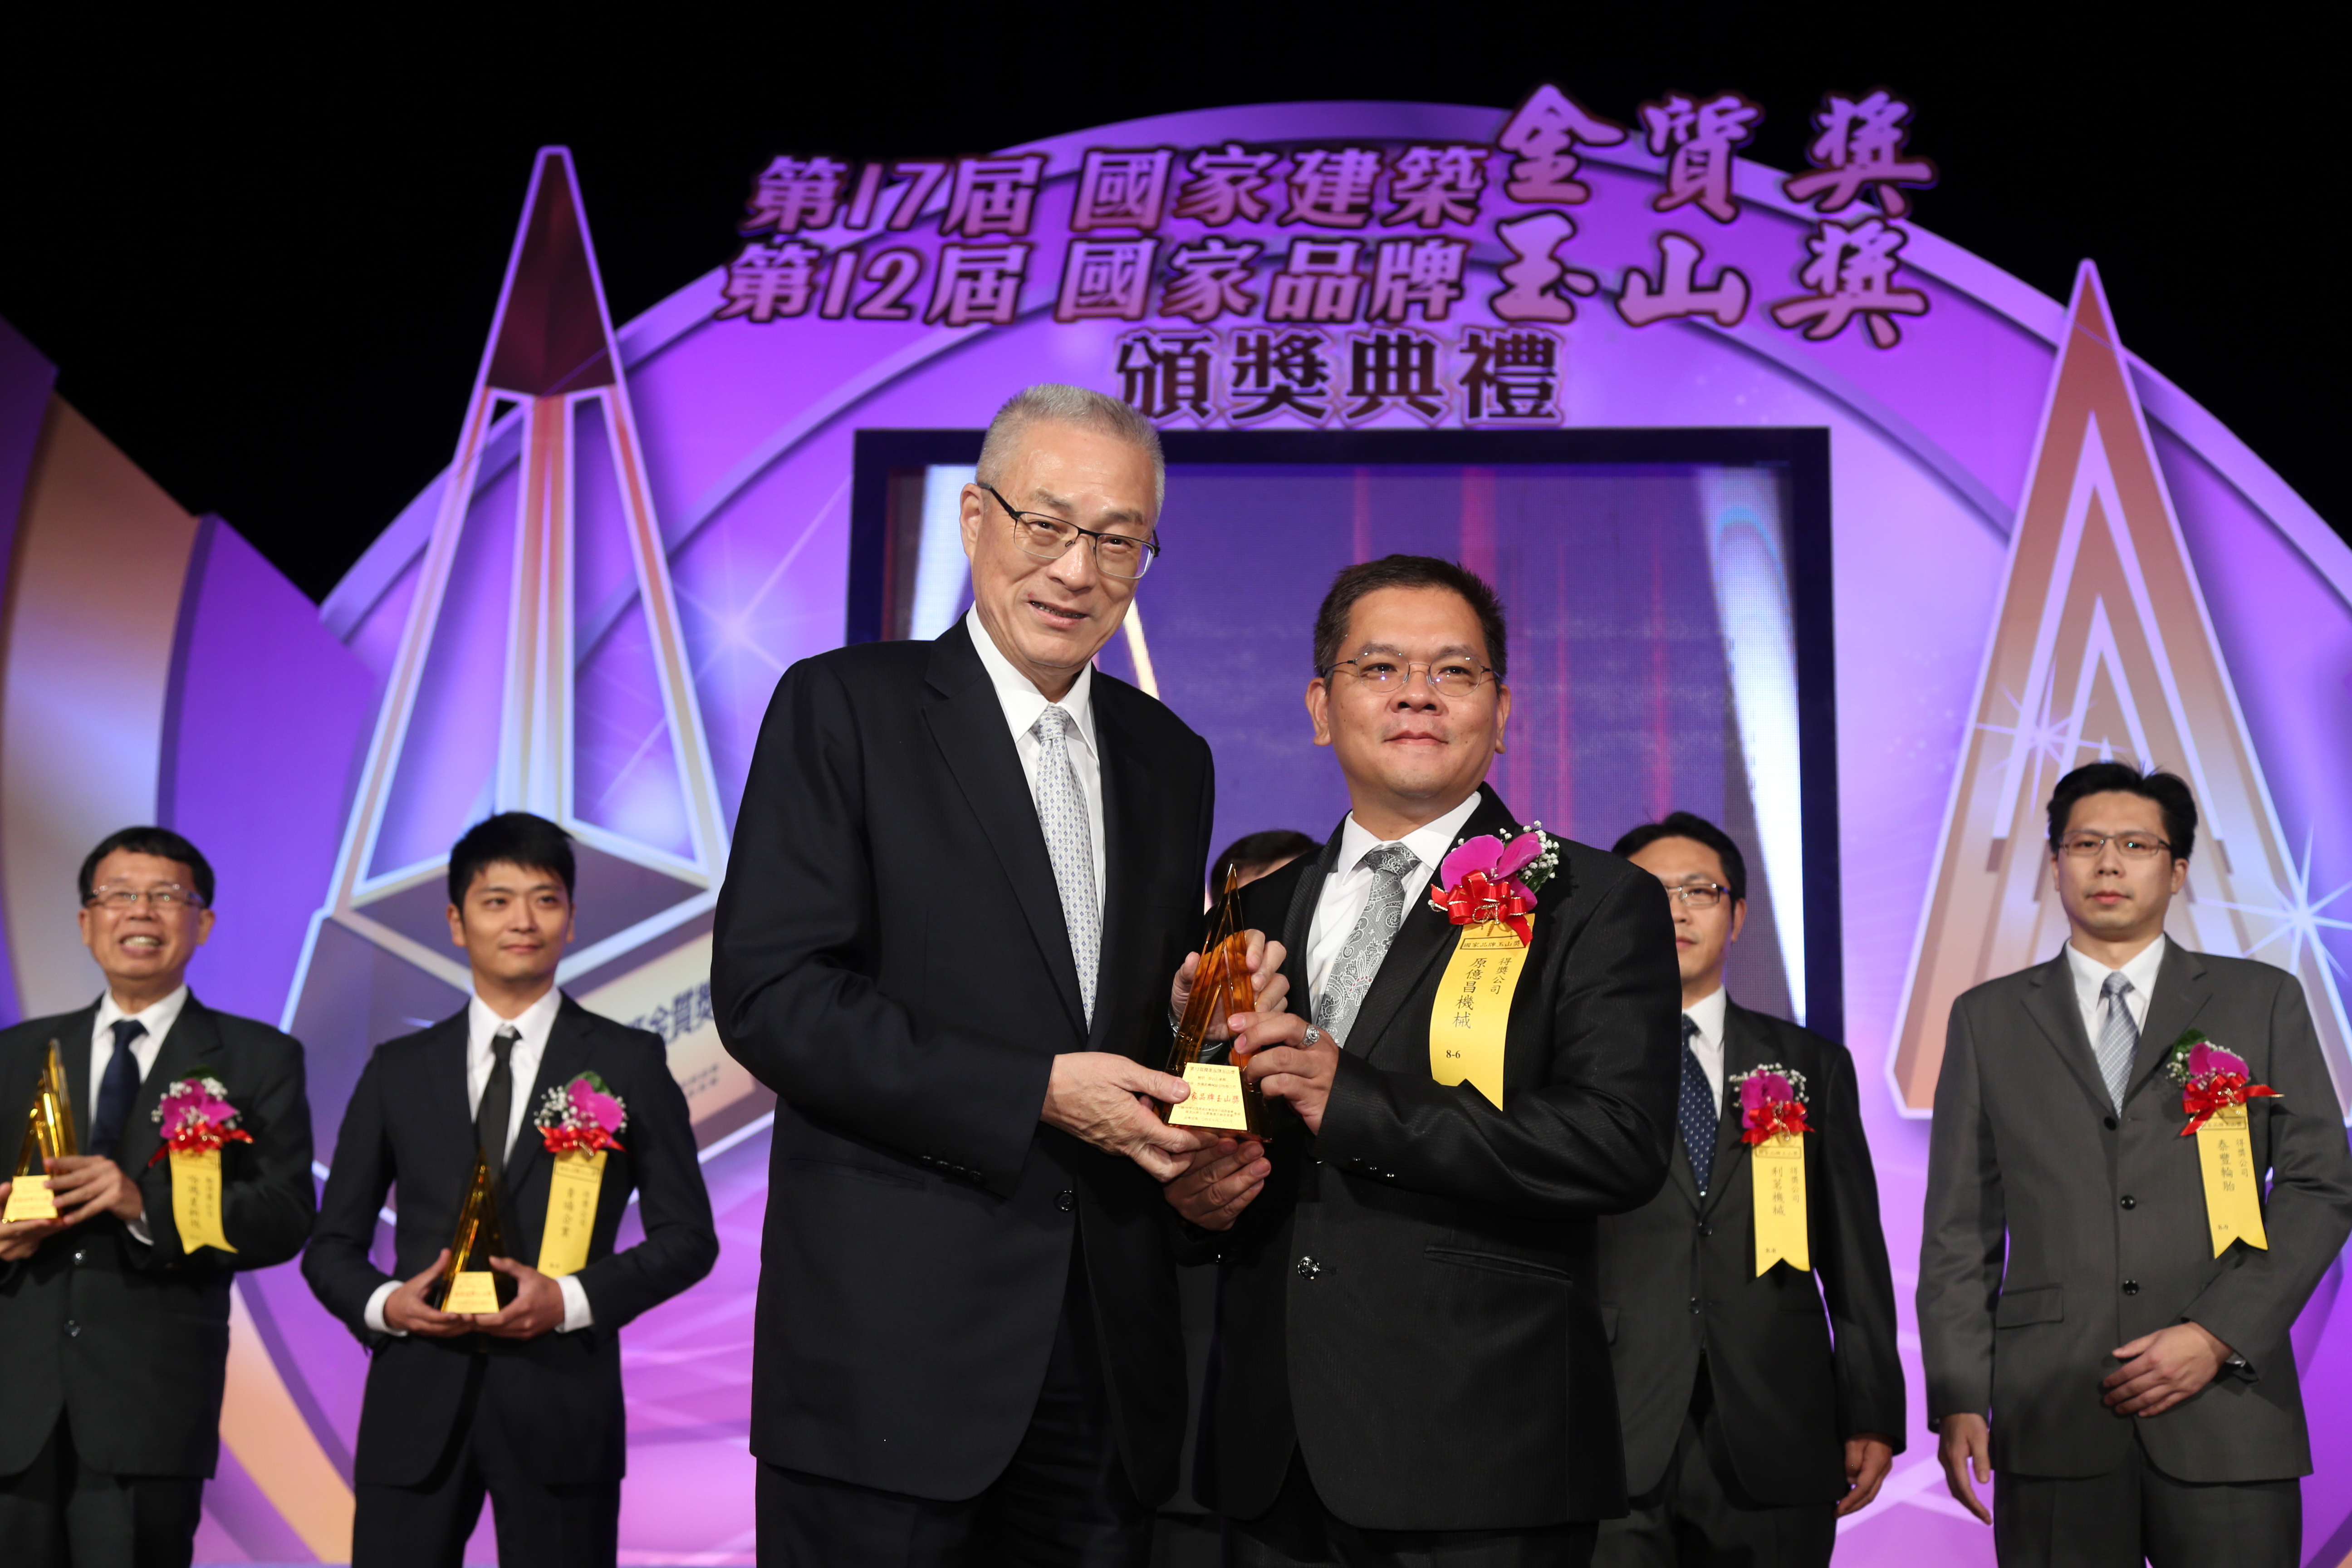 YYC awarded by 12th National Brand Yu Shan Award as Best Entrepreneur